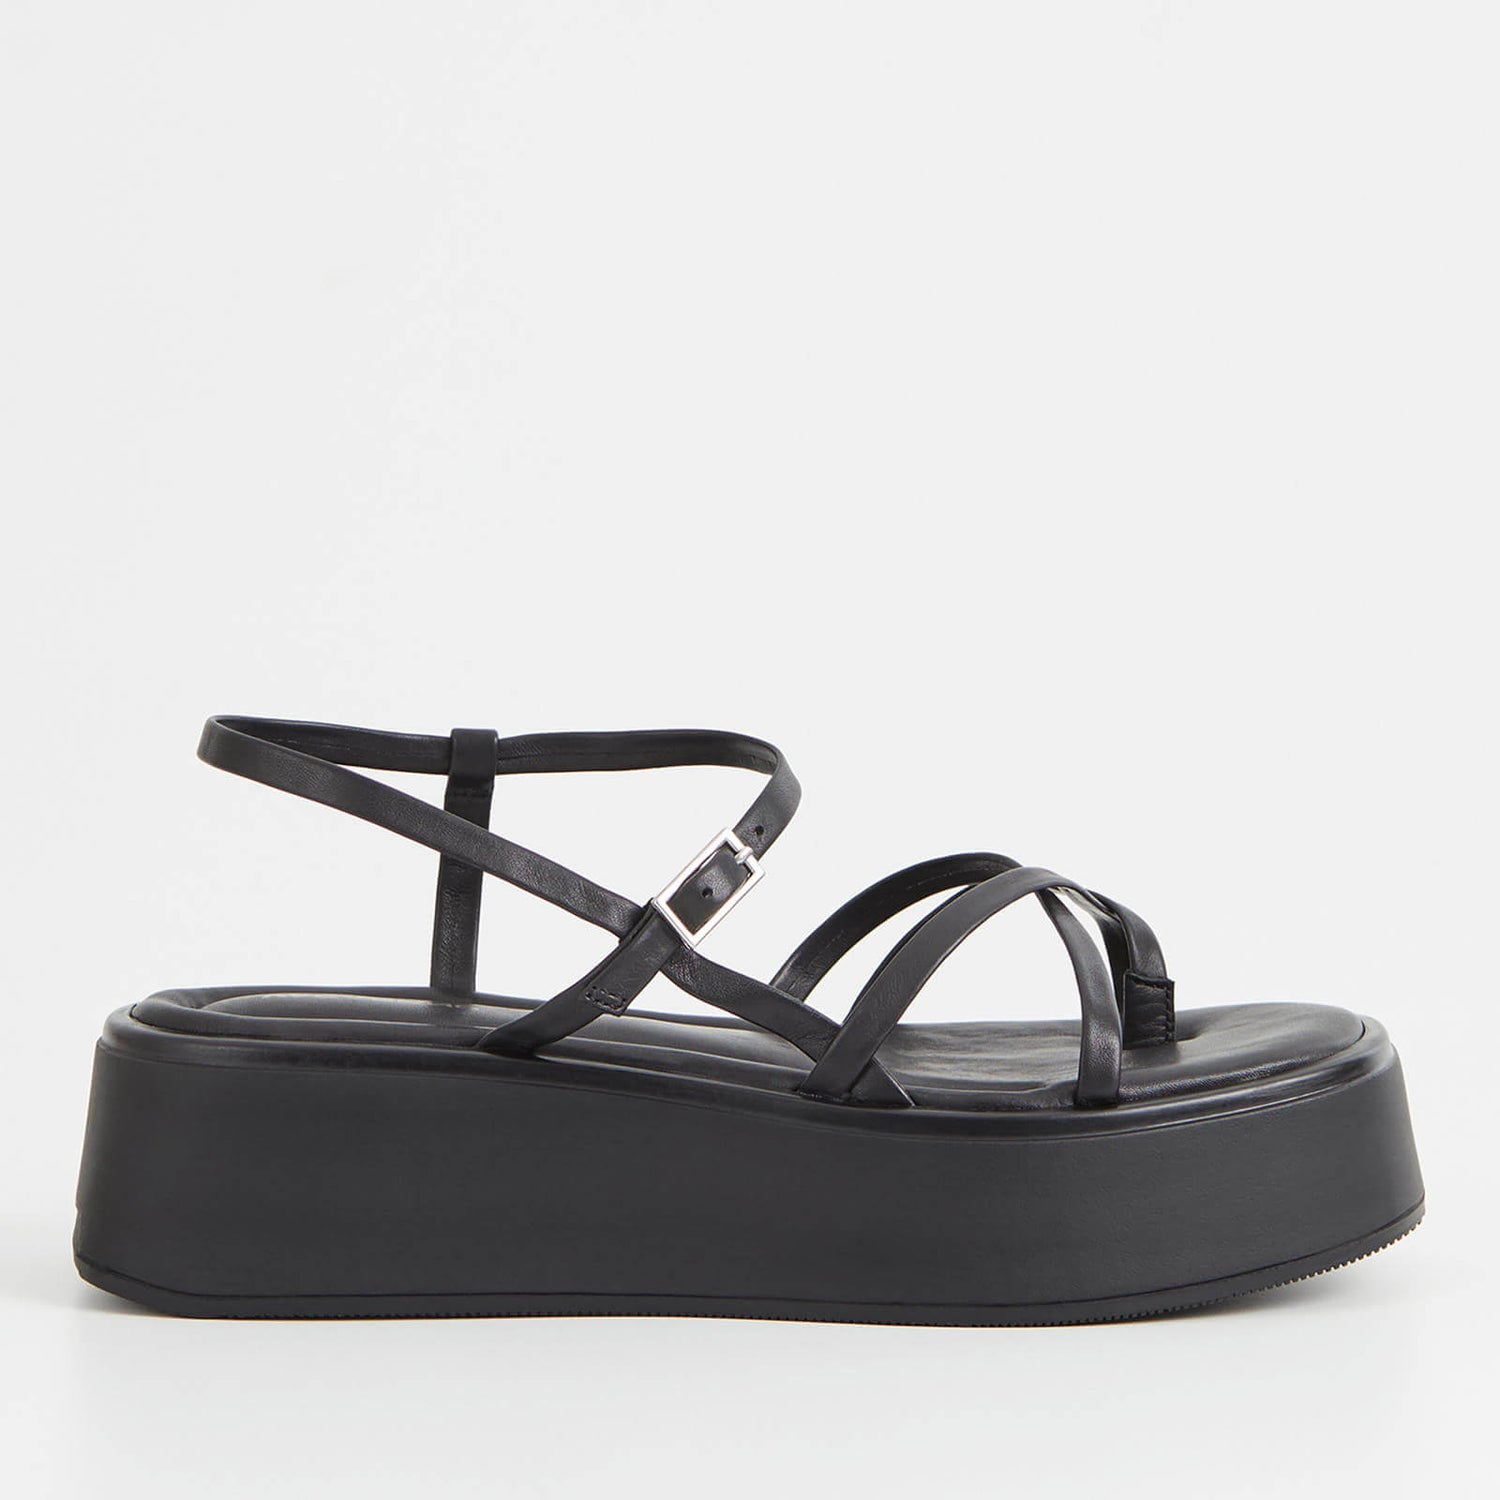 Vagabond Women's Leather Platform Sandals - UK 4